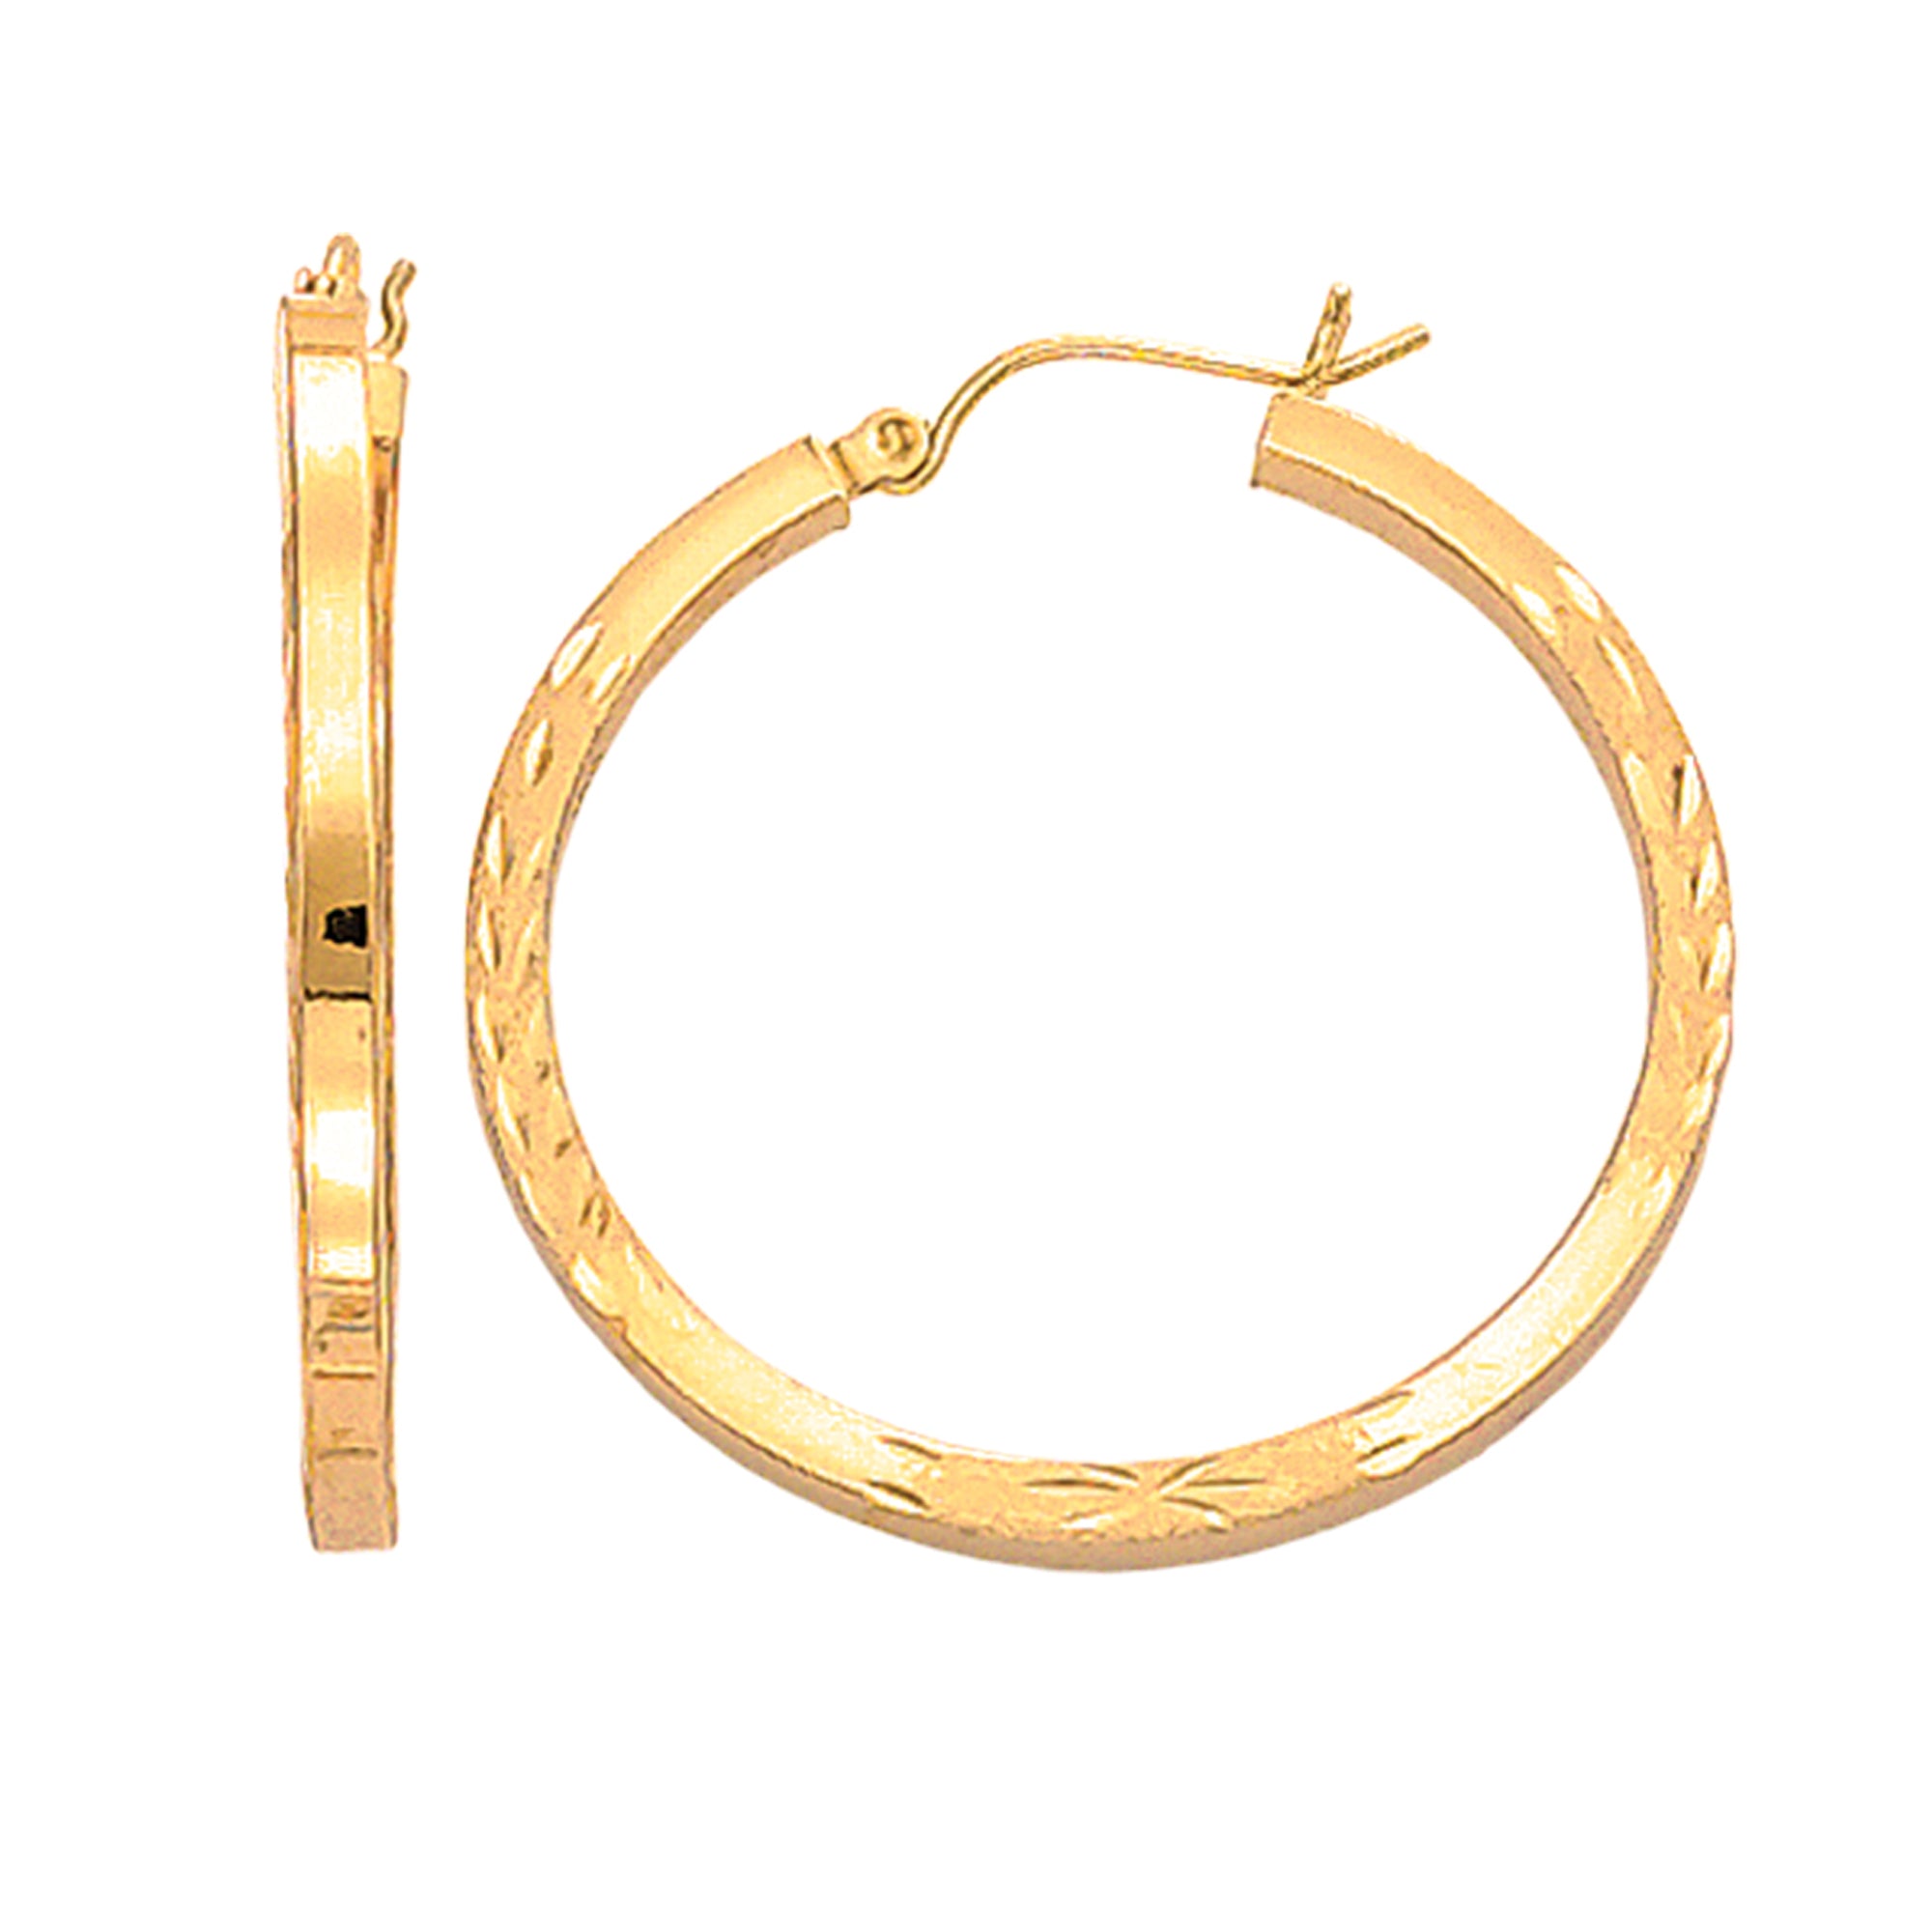 14K Yellow Gold Diamond Cut Square Tube Hoop Earrings, Diameter 35mm